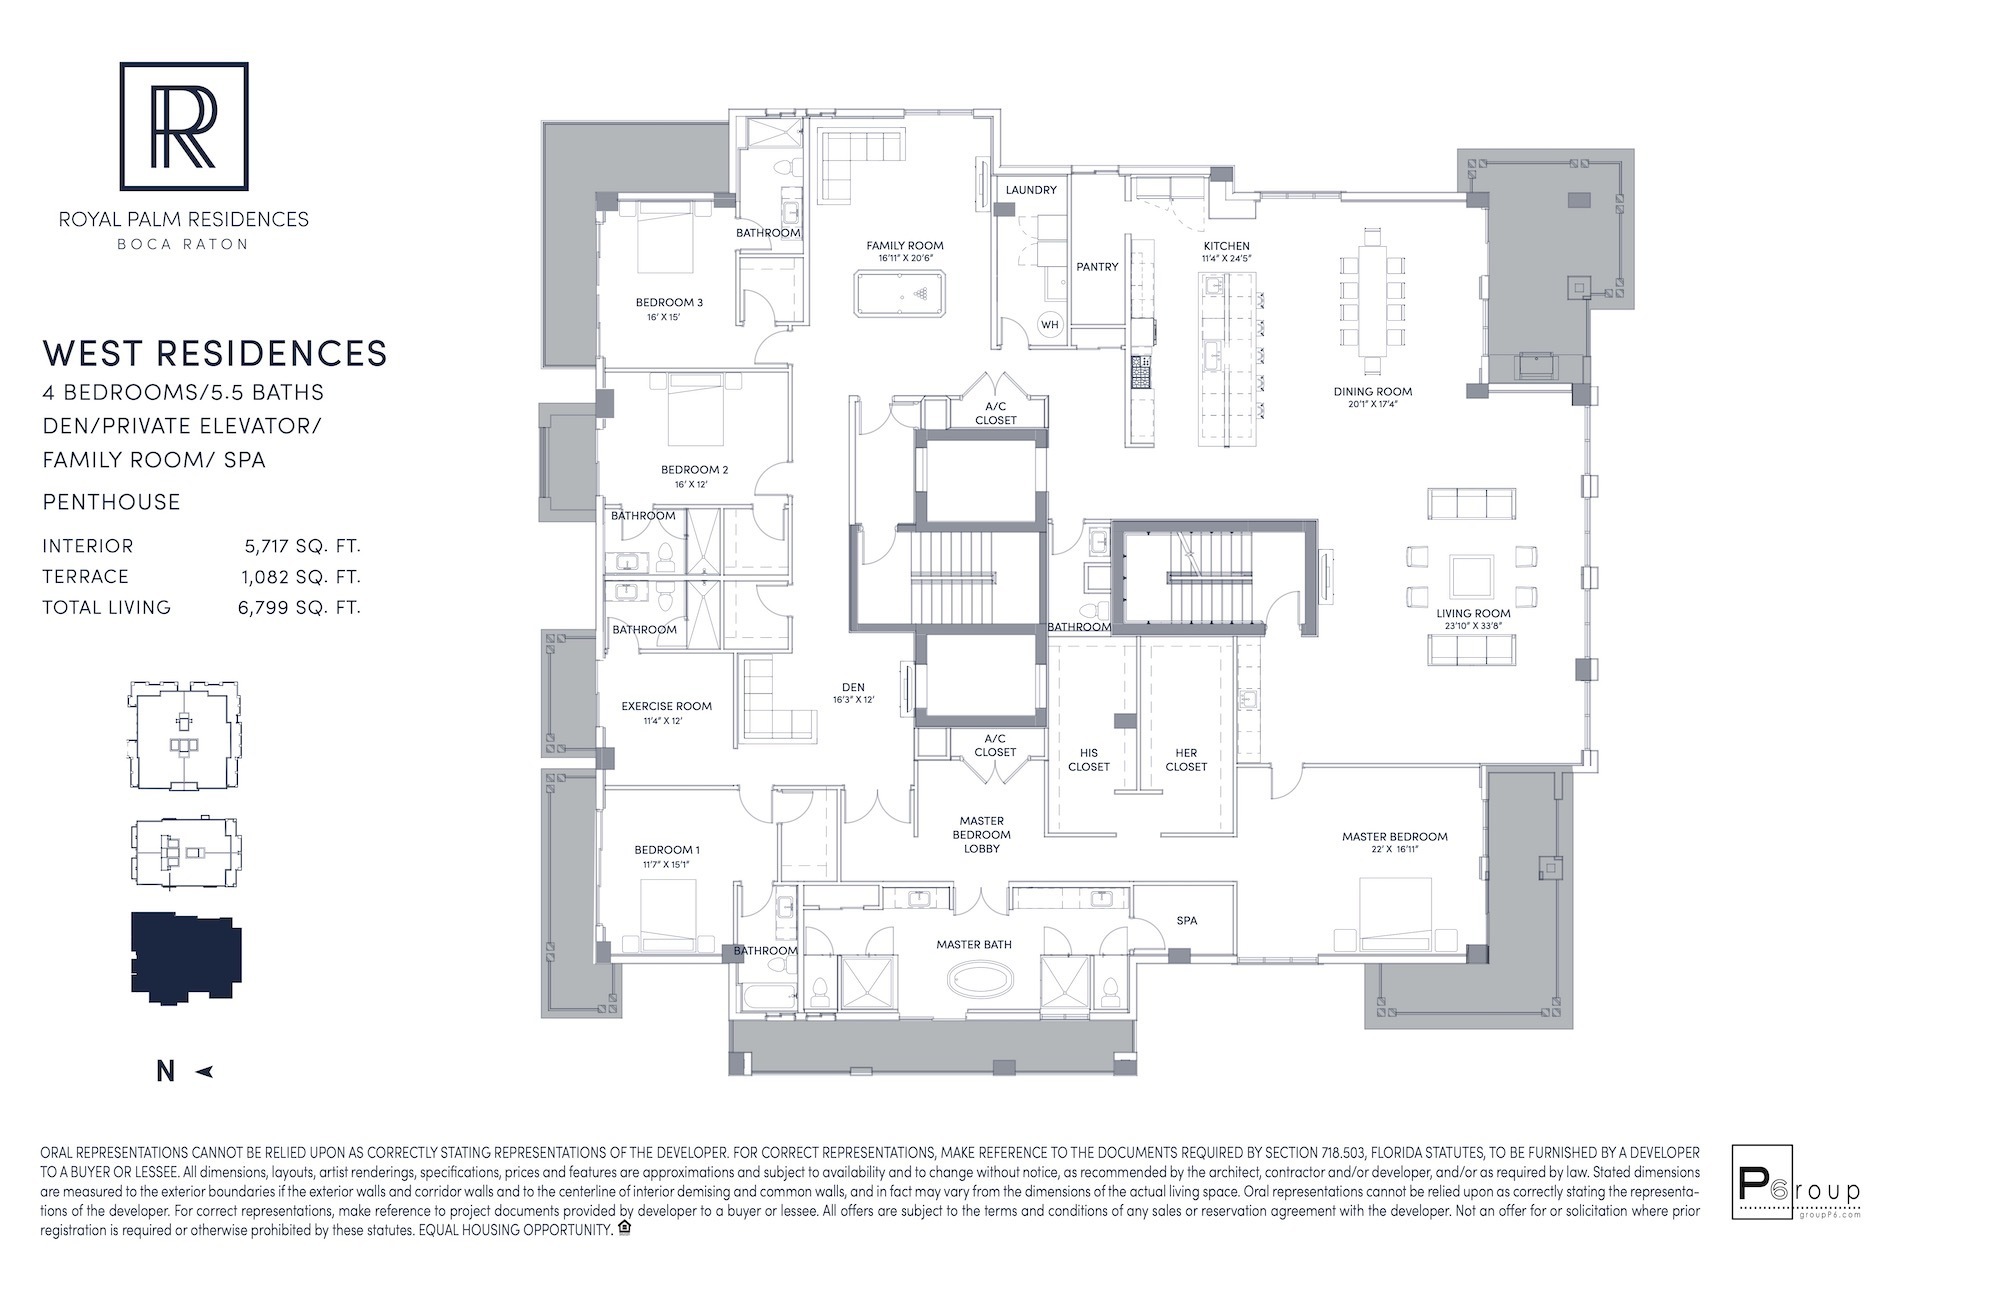 Floor Plan for Royal Palm Residences Floorplans, West Residences Penthouse